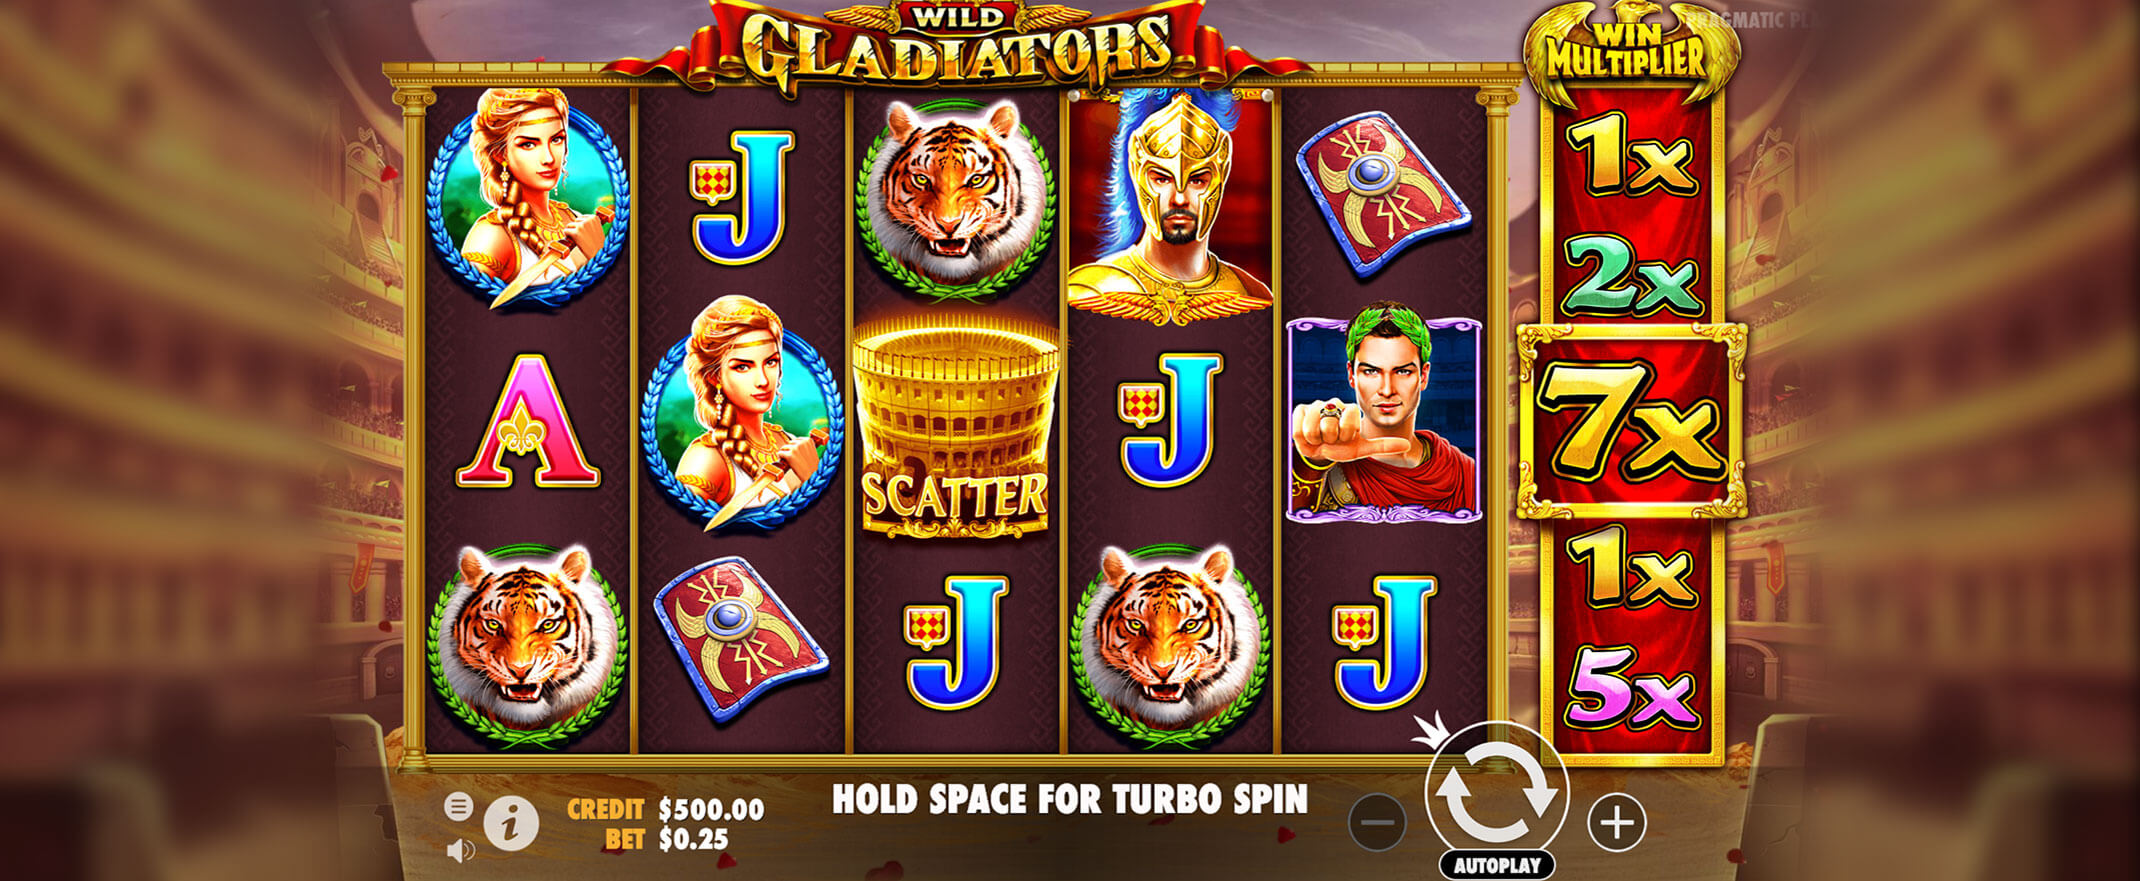 Wild Gladiators slot from Pragmatic Play